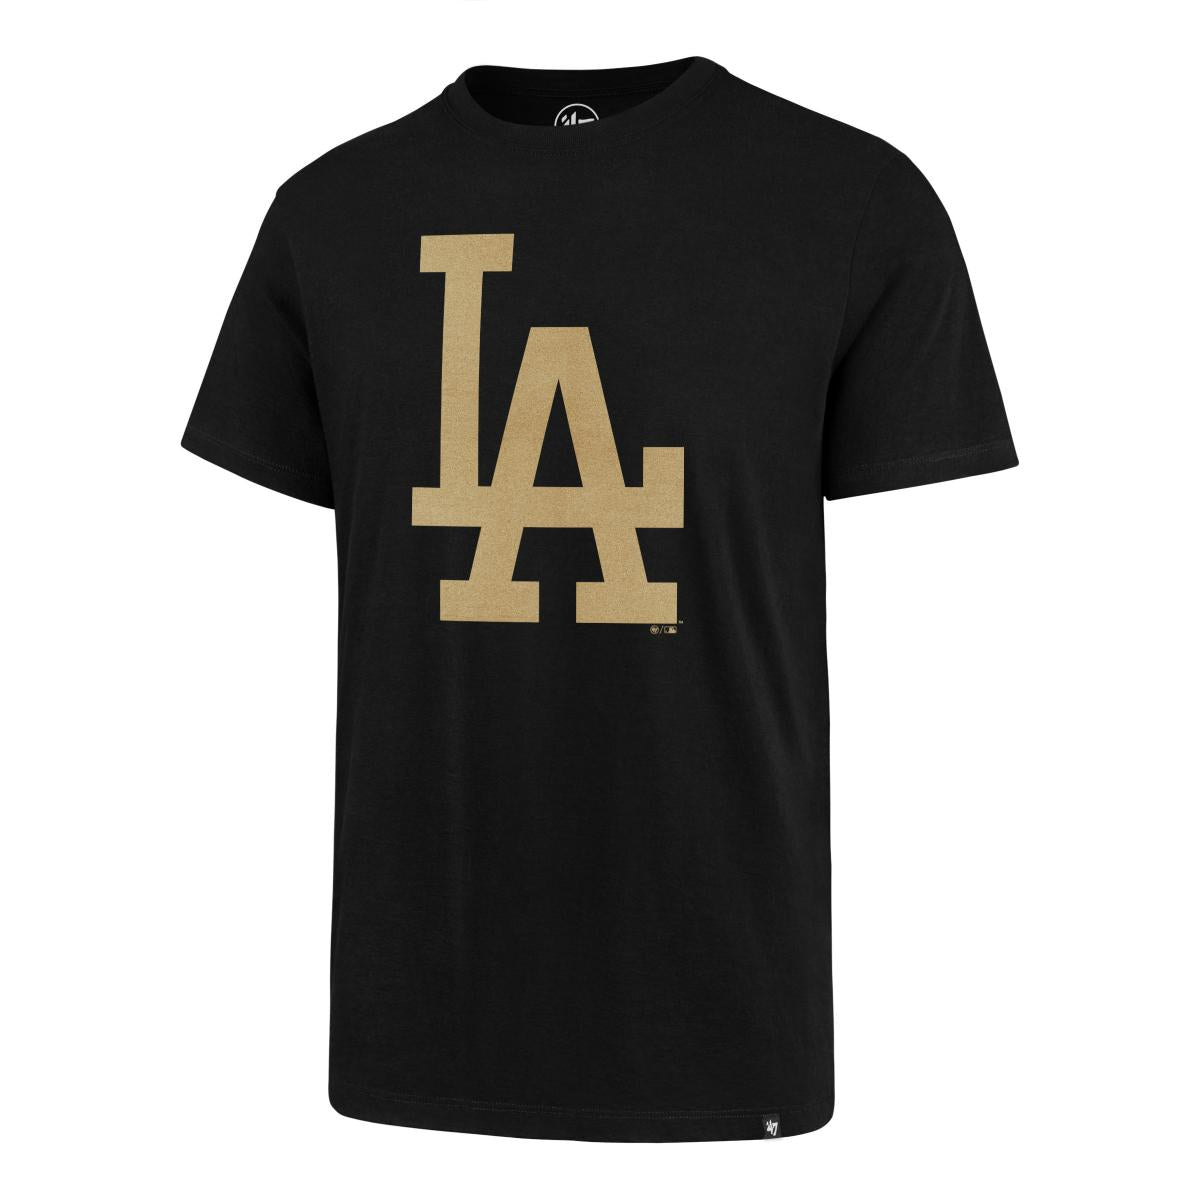 Playera Hombre Los Angeles Dodgers MLB 47 Brand